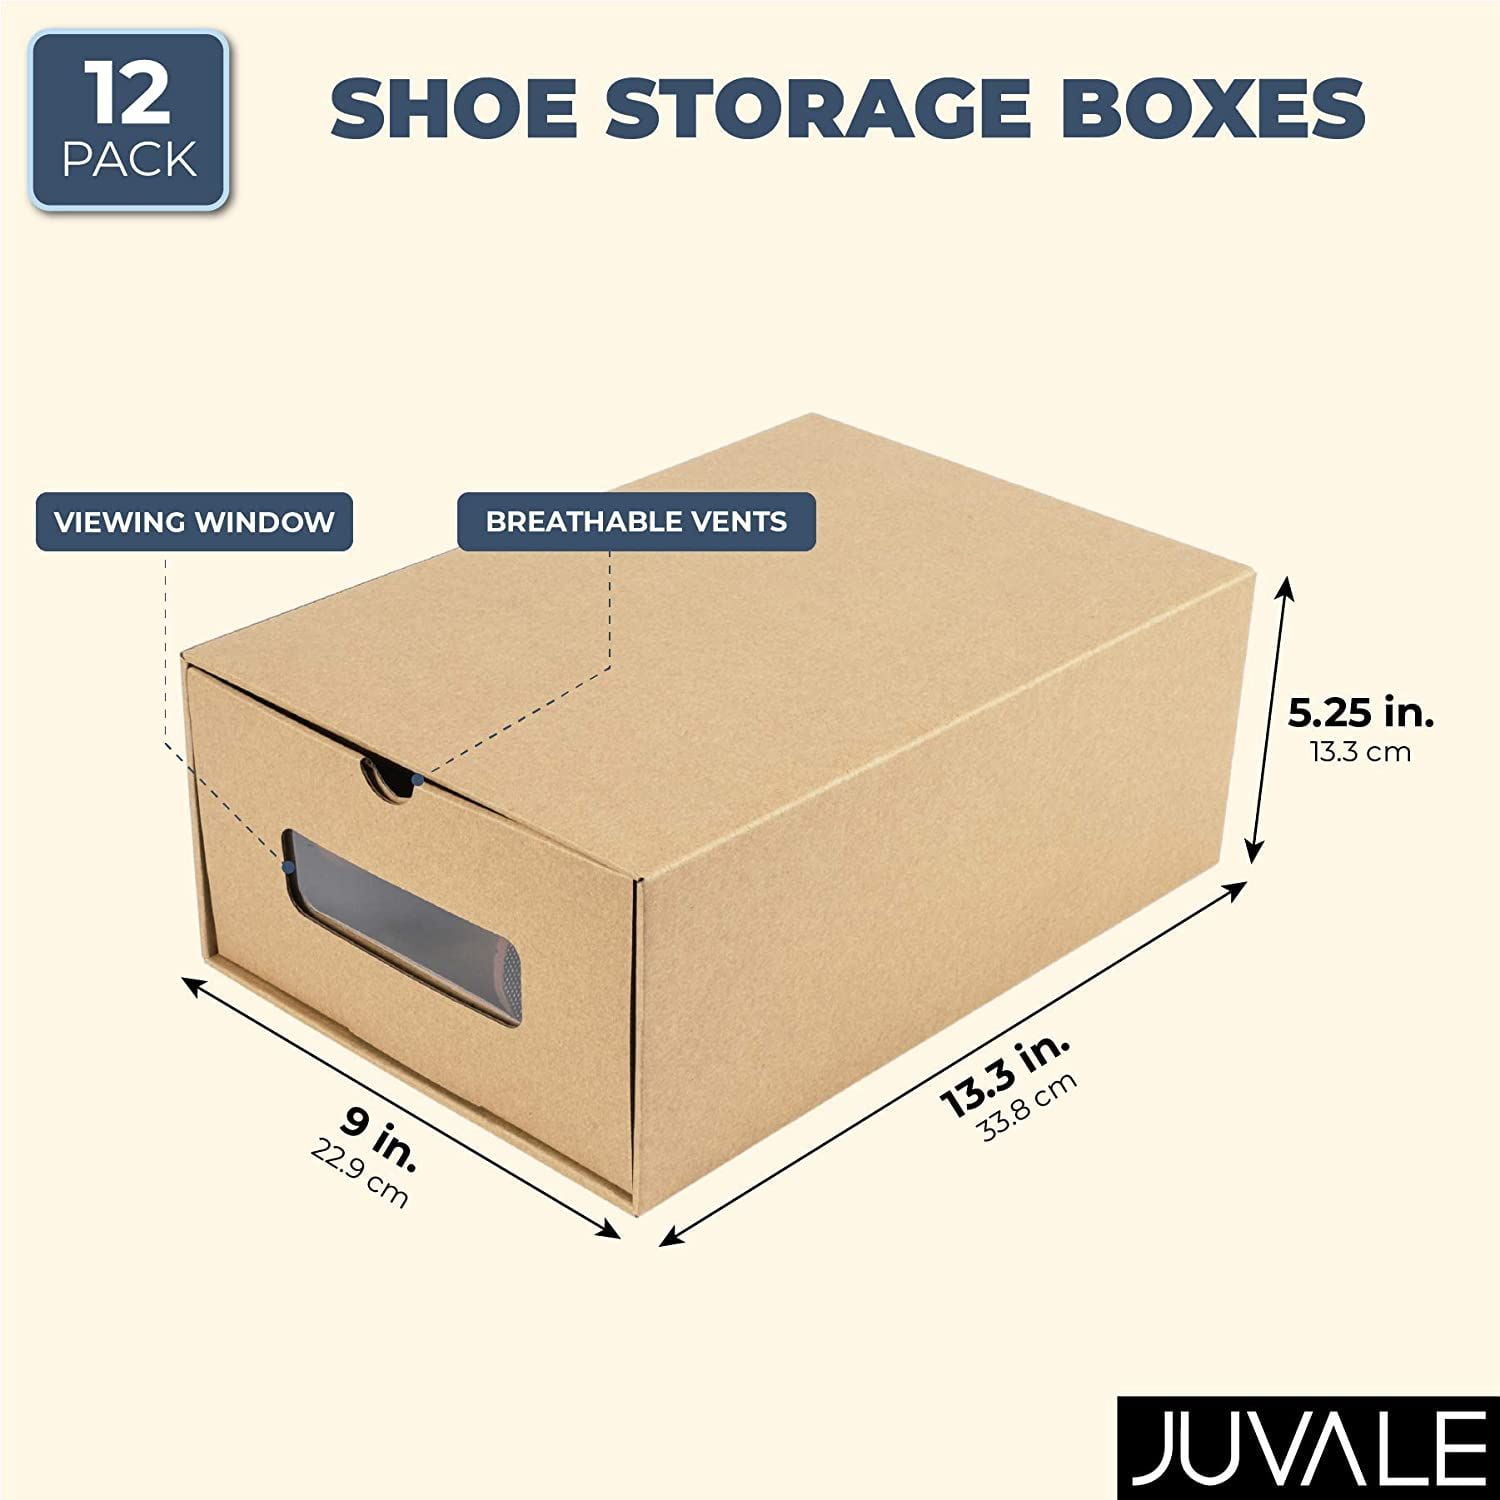 Cardboard Box Air single packages 20 cm x 14 cm x h 11 cm Pieces 5